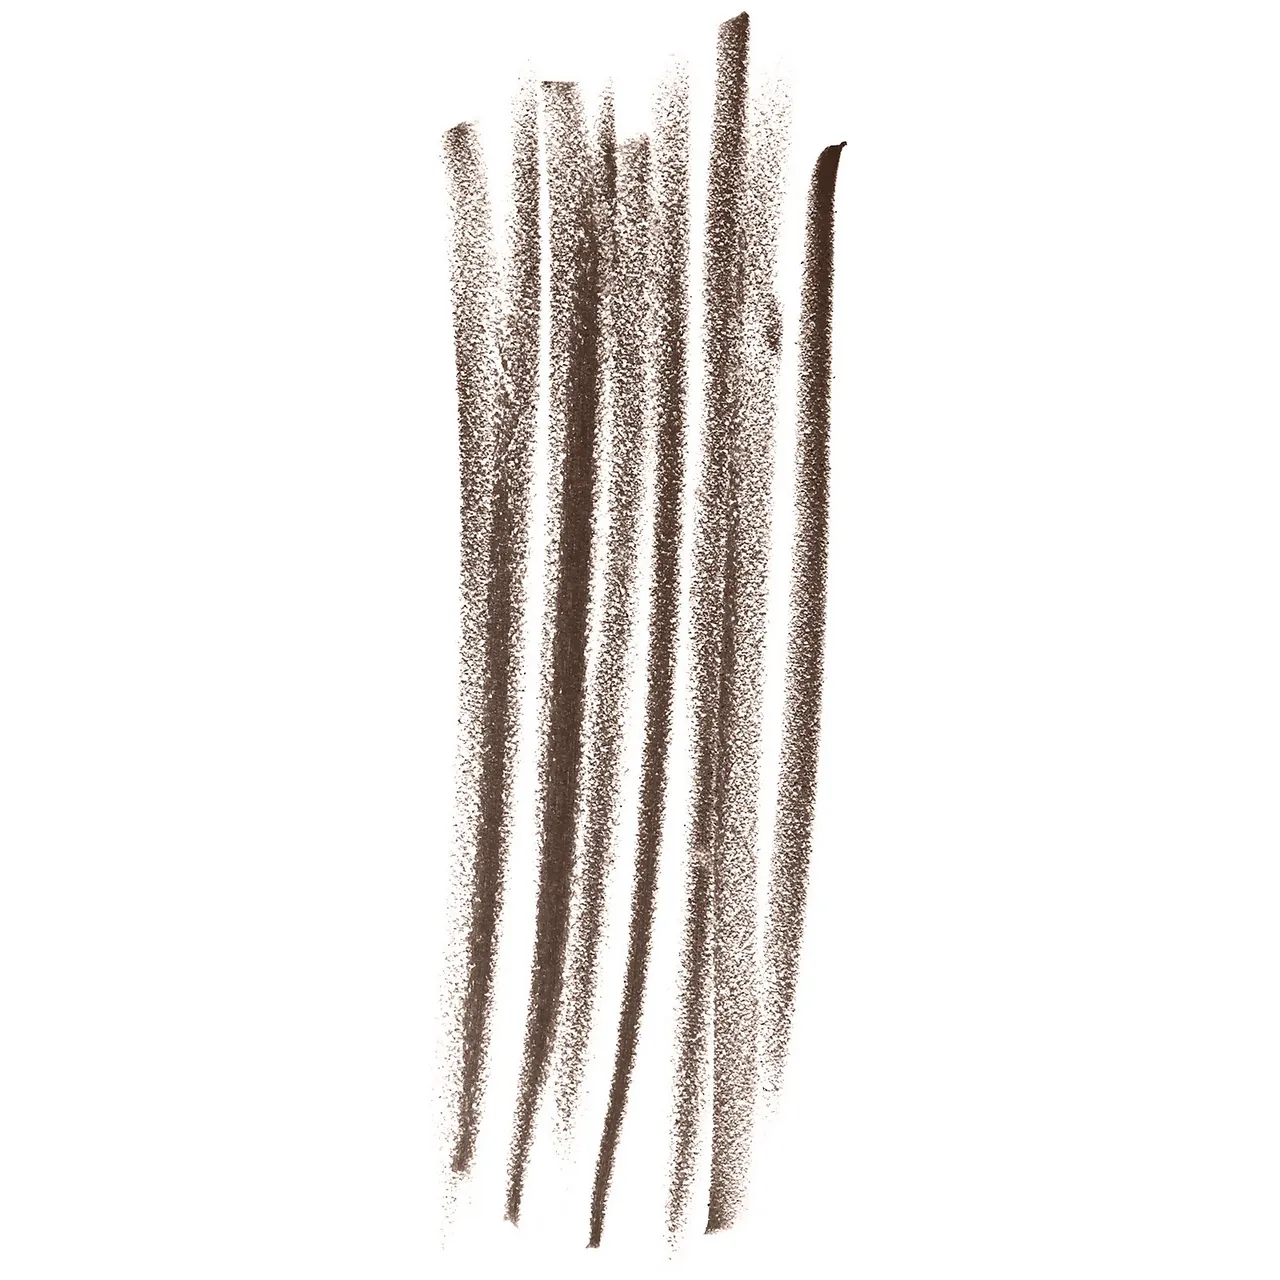 Bobbi Brown Long-Wear Brow Pencil 1.15g (Various Shades) - Rich Brown